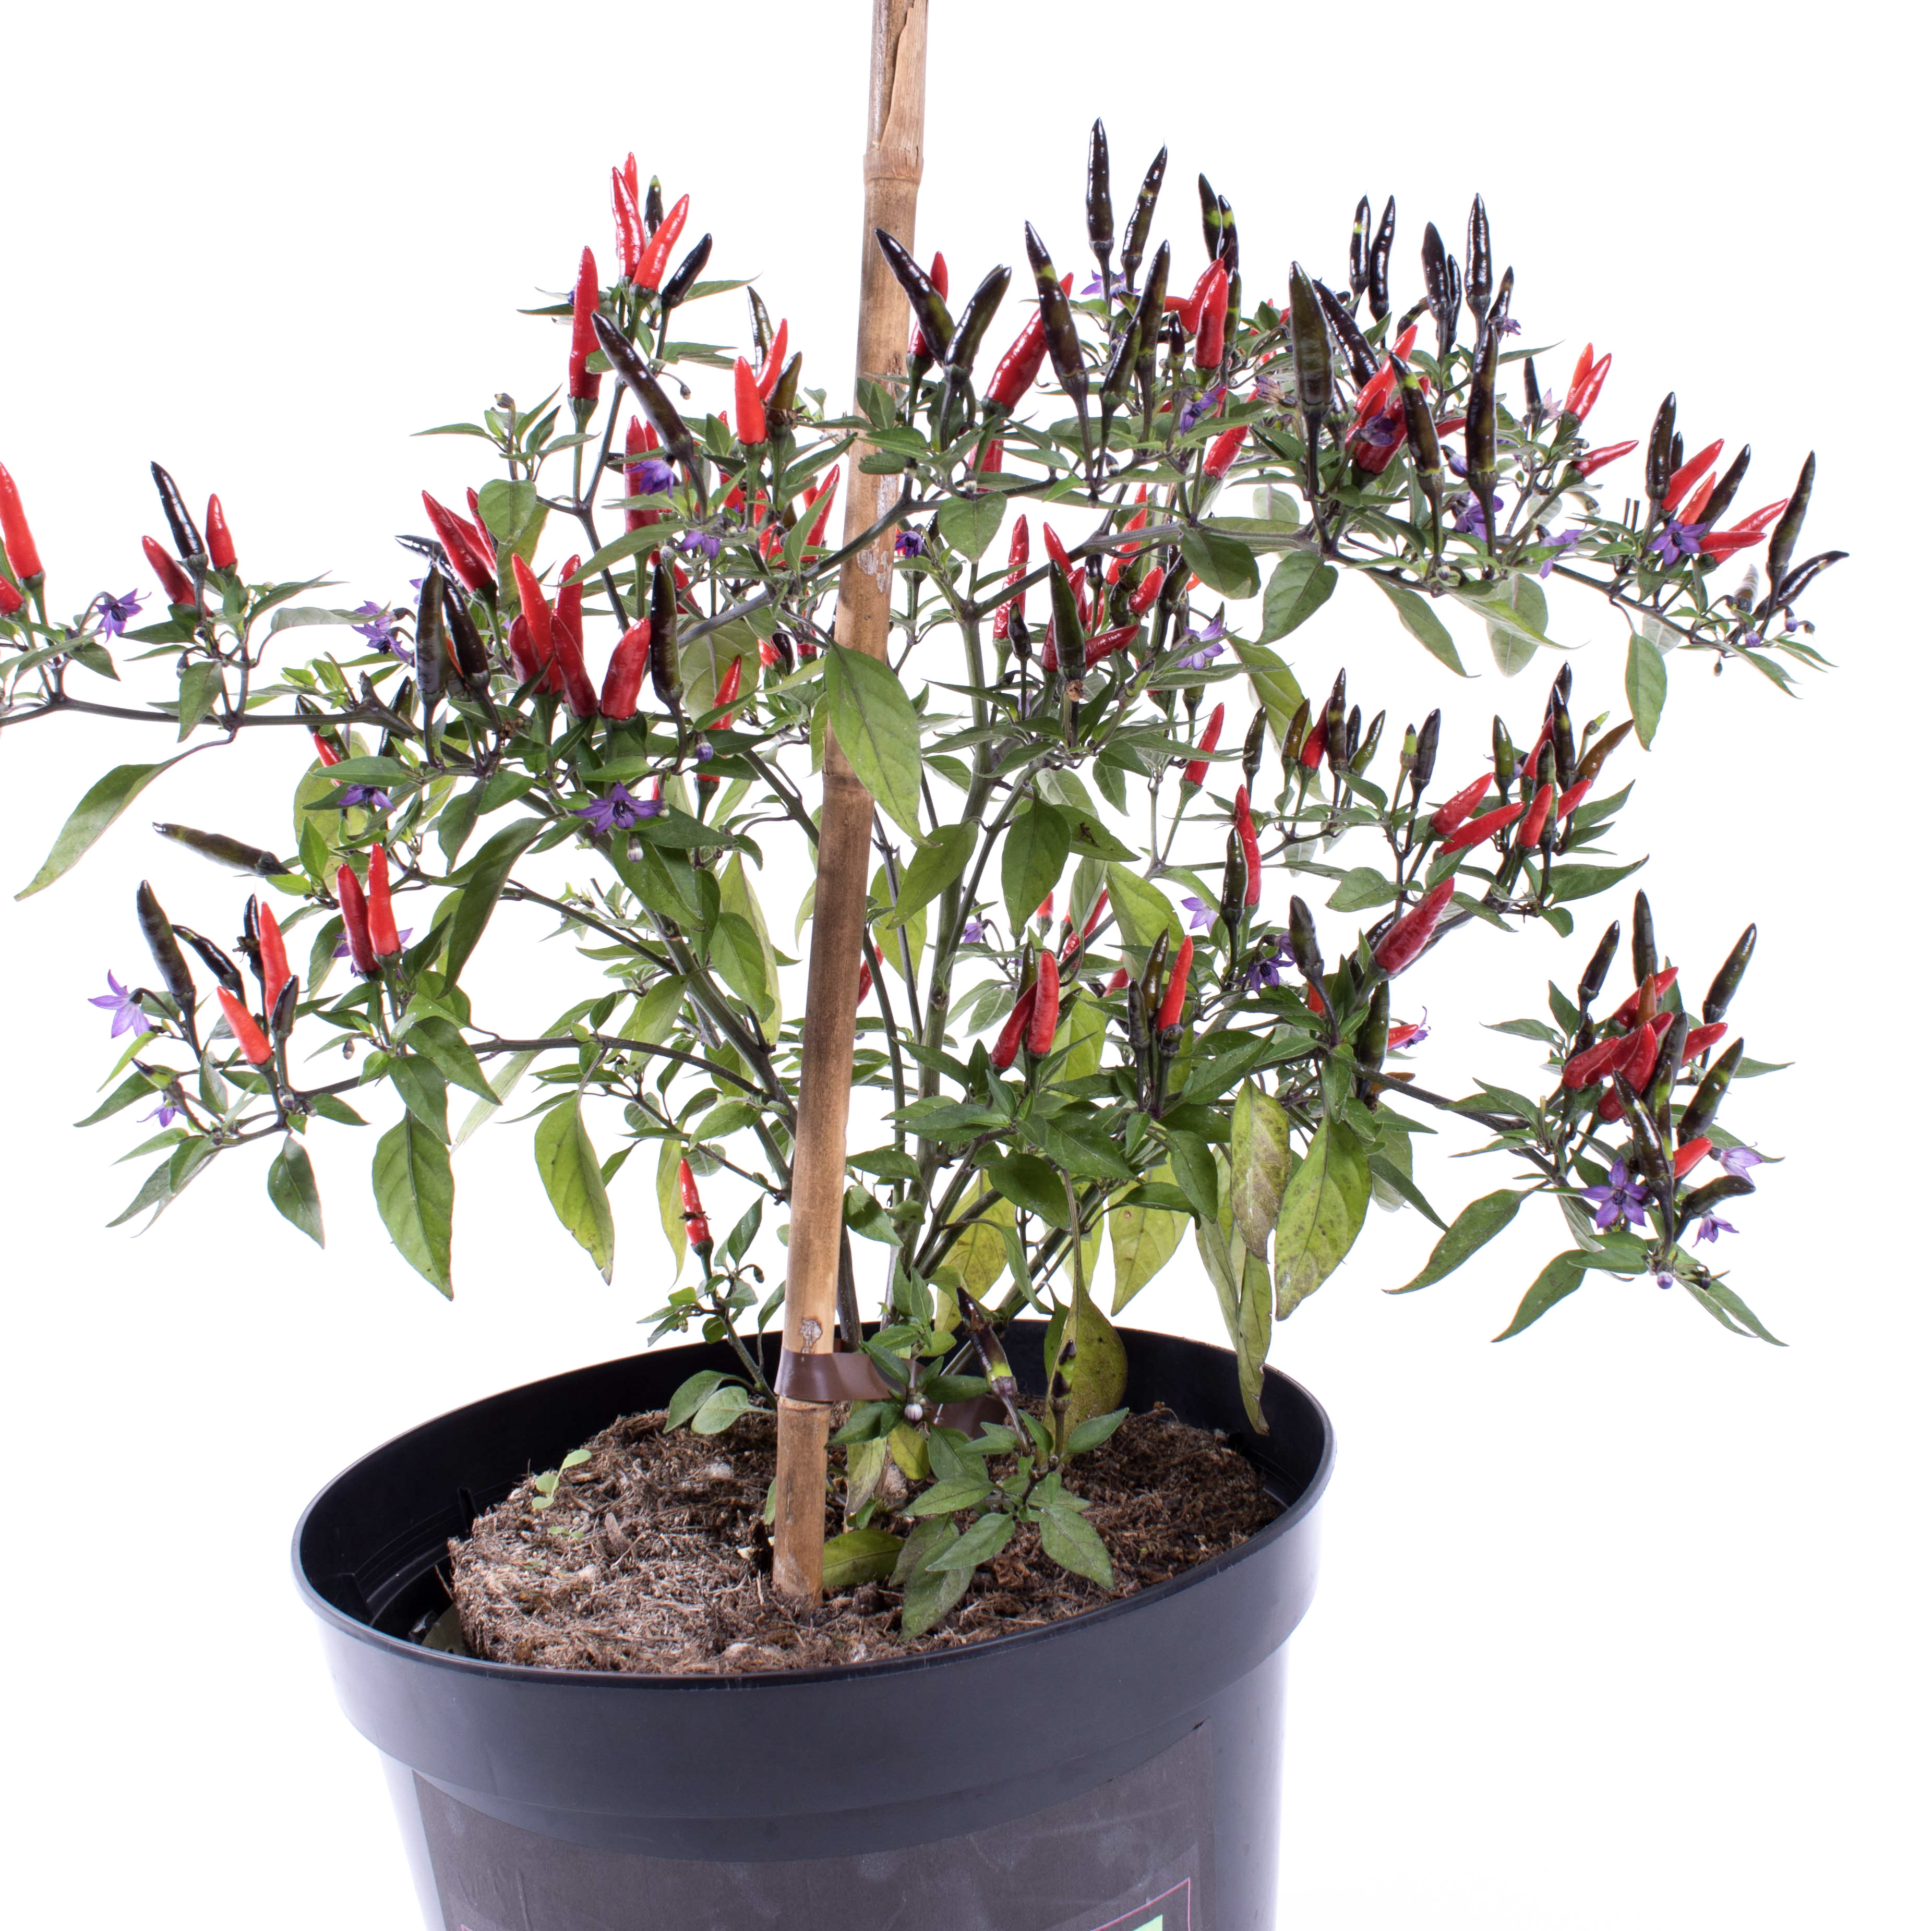 Arlecchino bunte Chili Harlekin Chilli aus Italien ideale Zimmerpflanze 